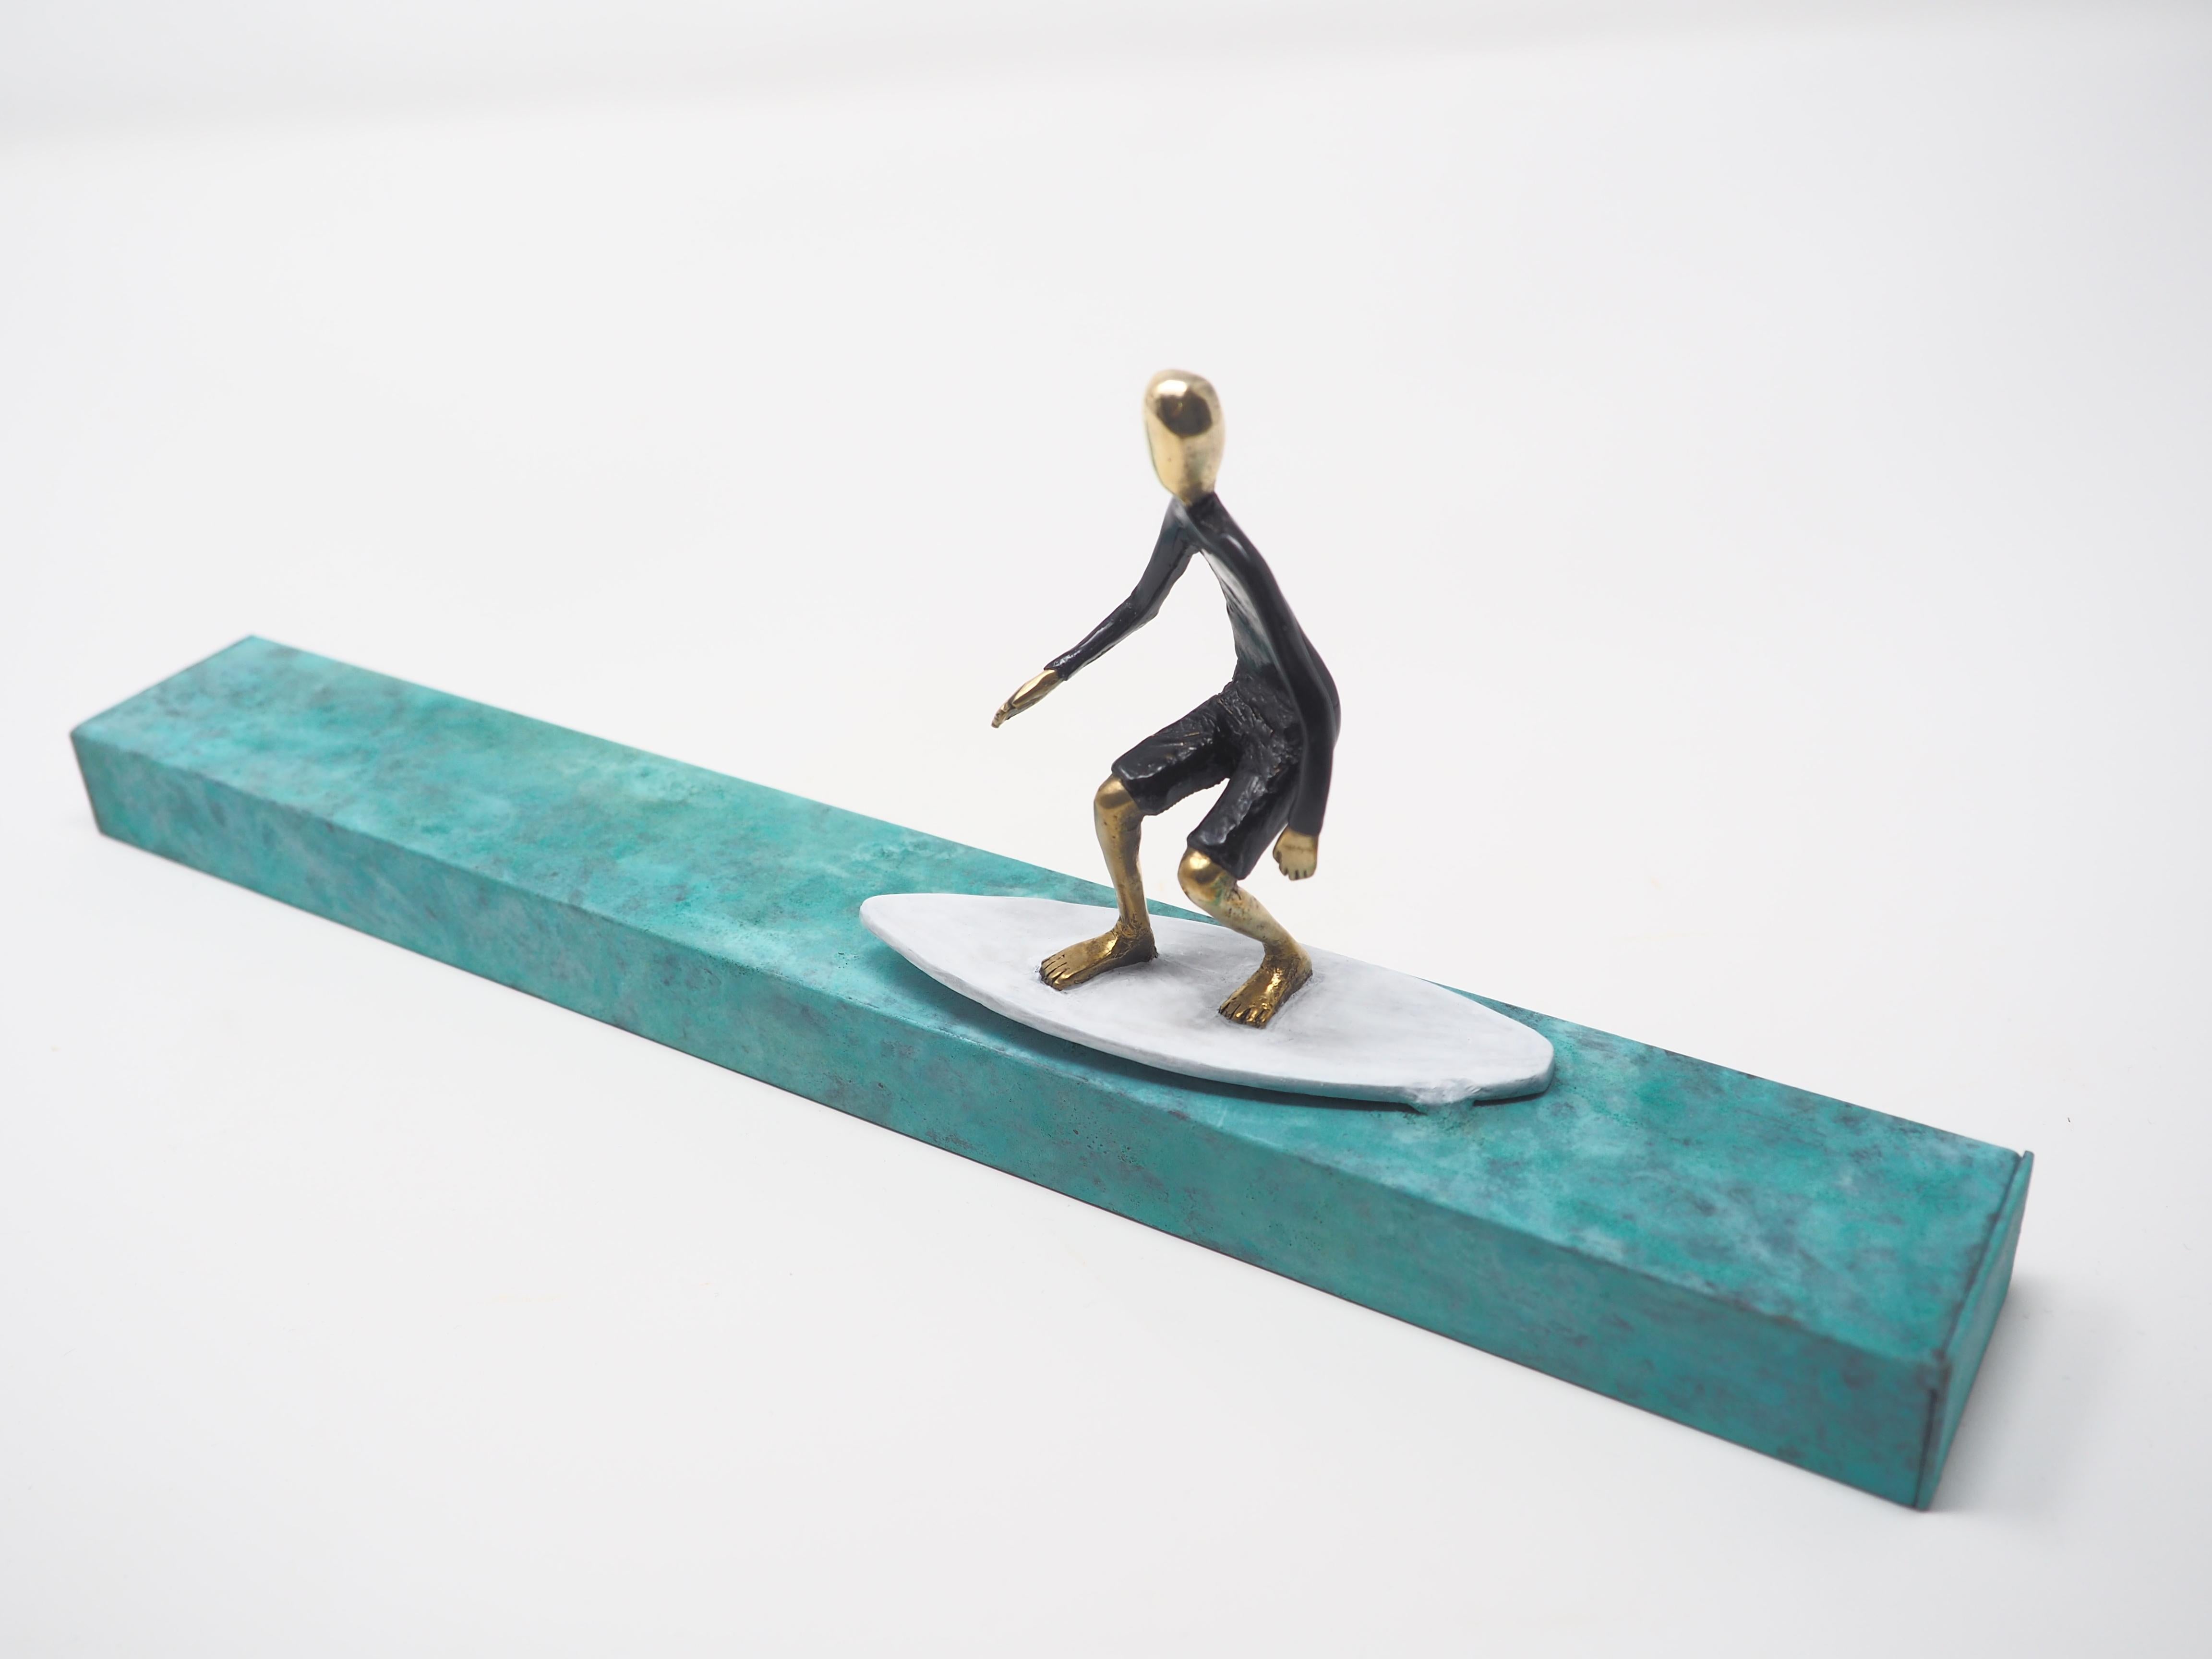 Into the barrel- bronze and brass small figurative man surfer mural sculpture  - Contemporary Sculpture by Mireia Serra